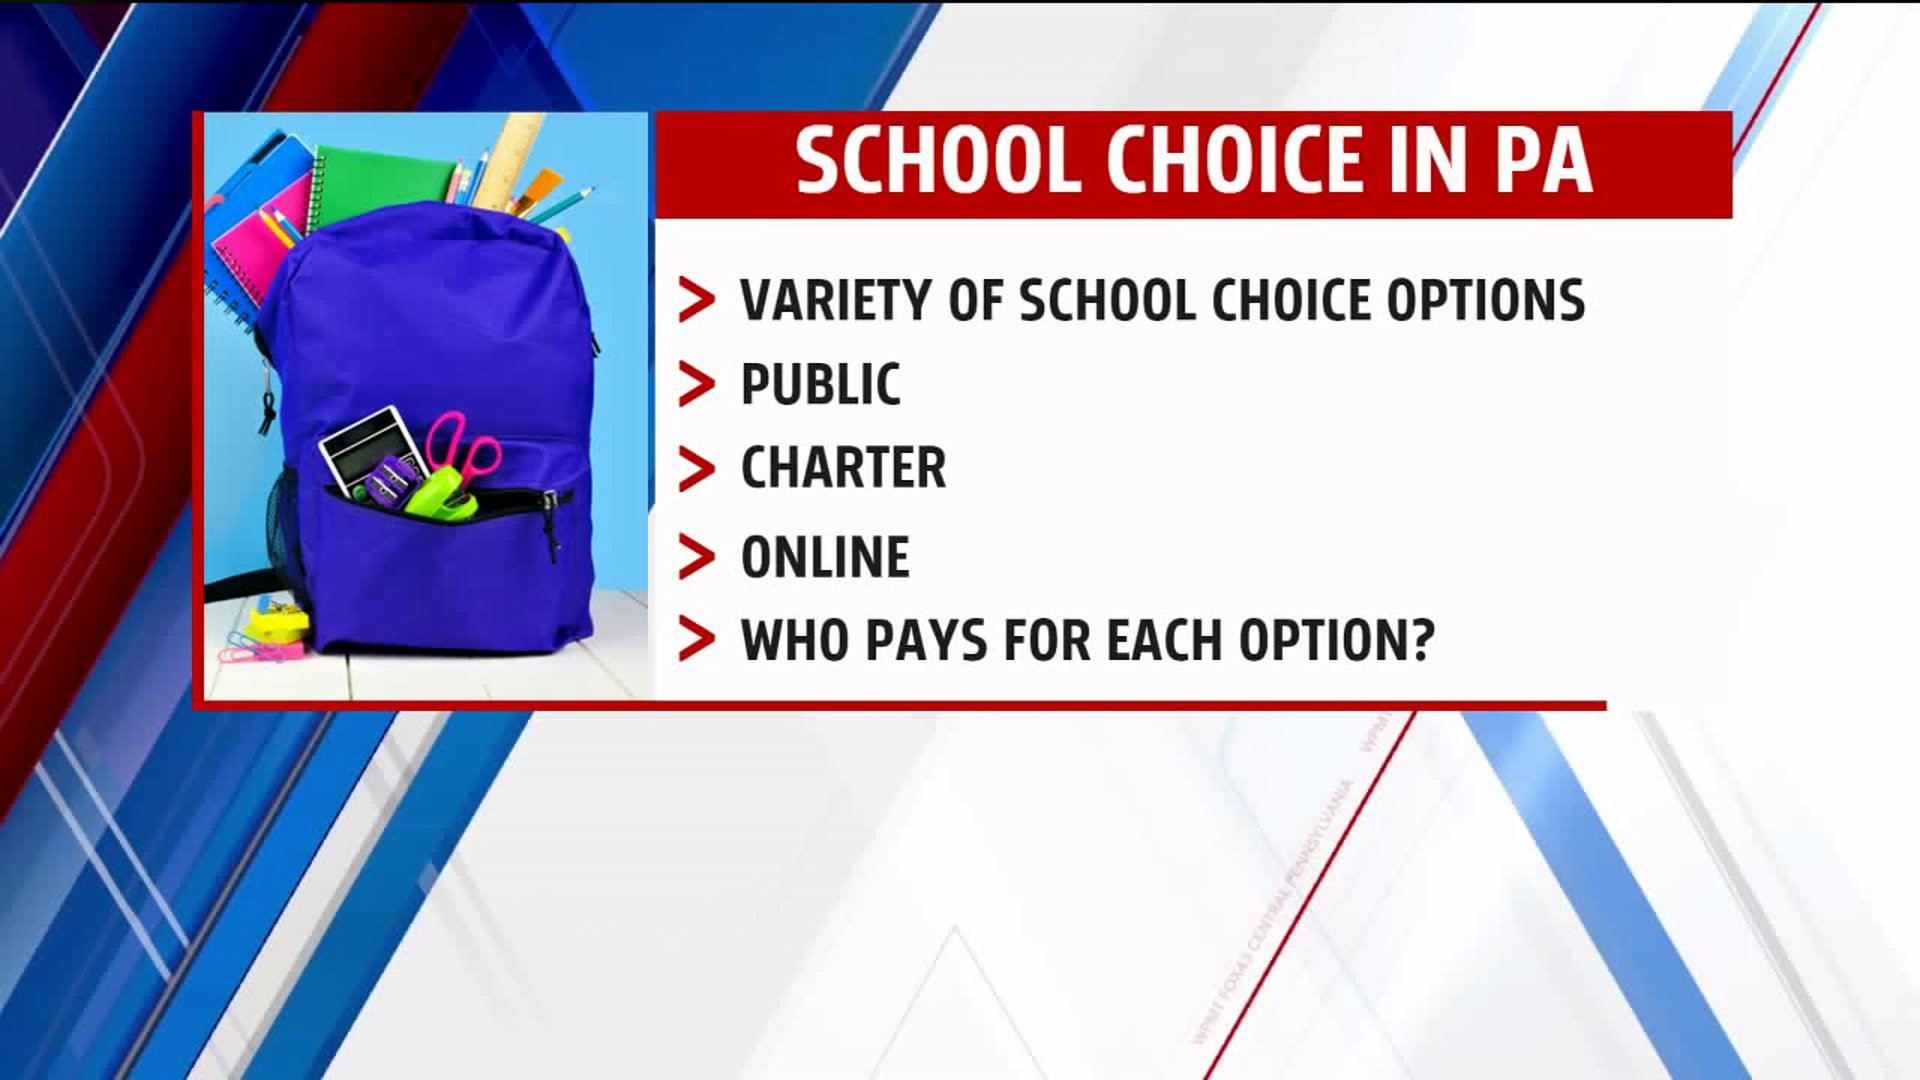 School choice in Pennsylvania